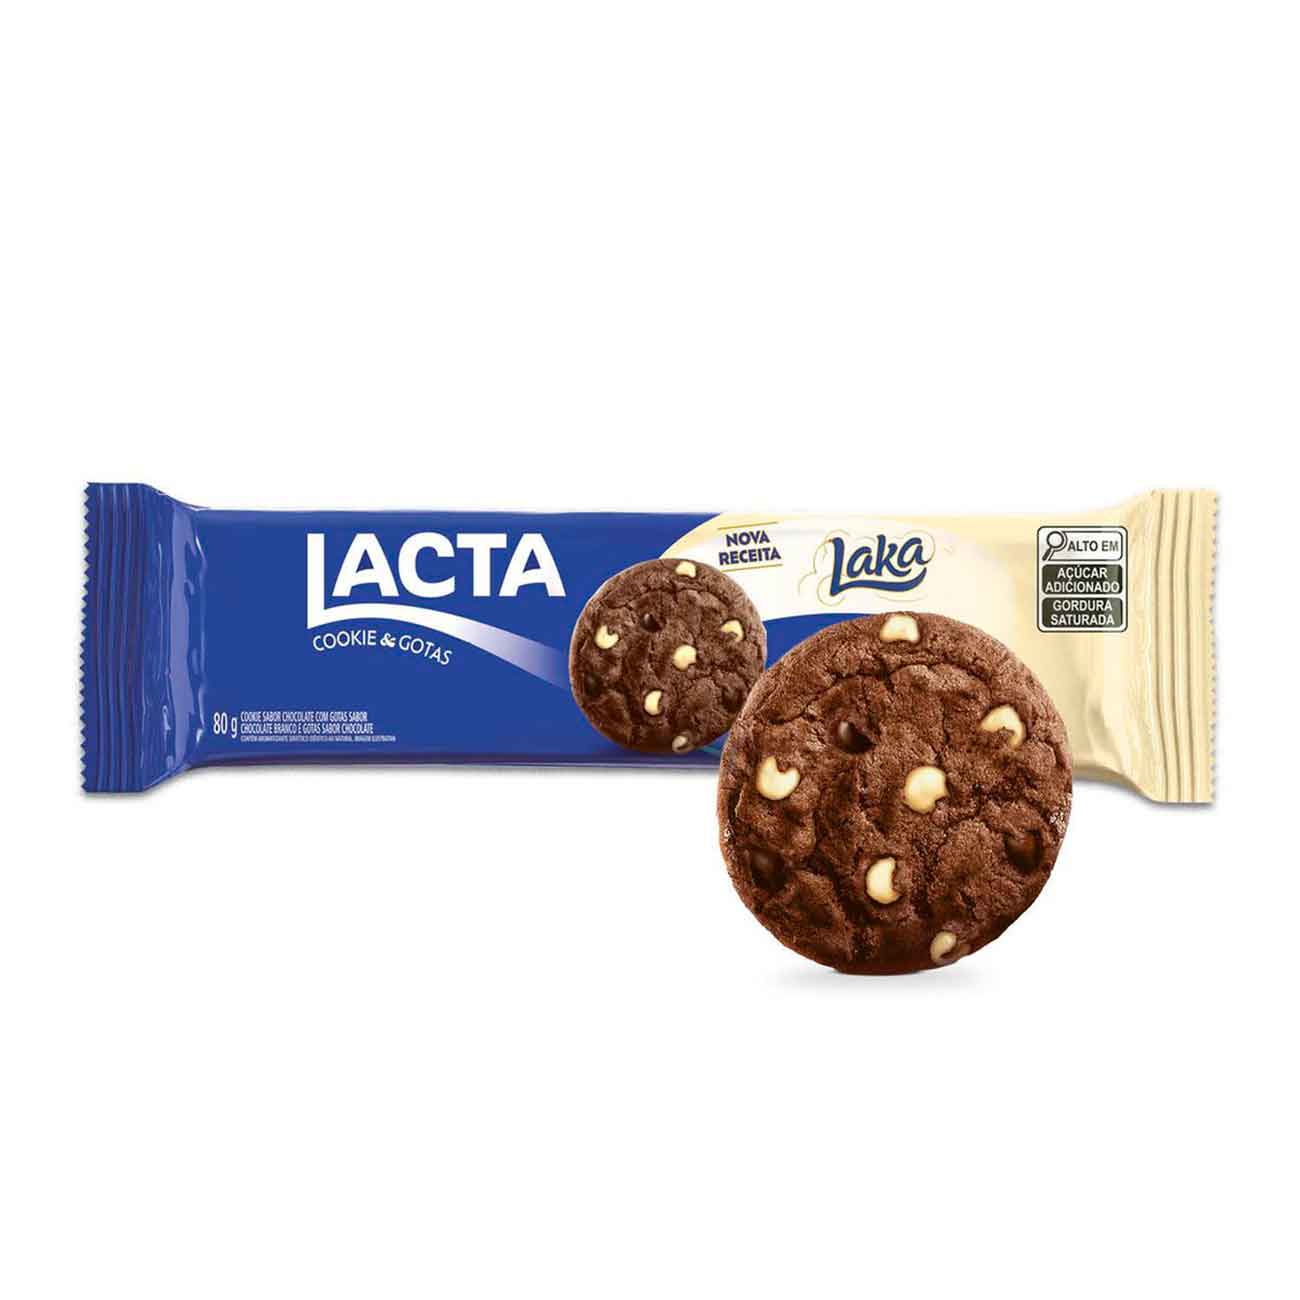 Biscoito Cookies Lacta Laka 80g